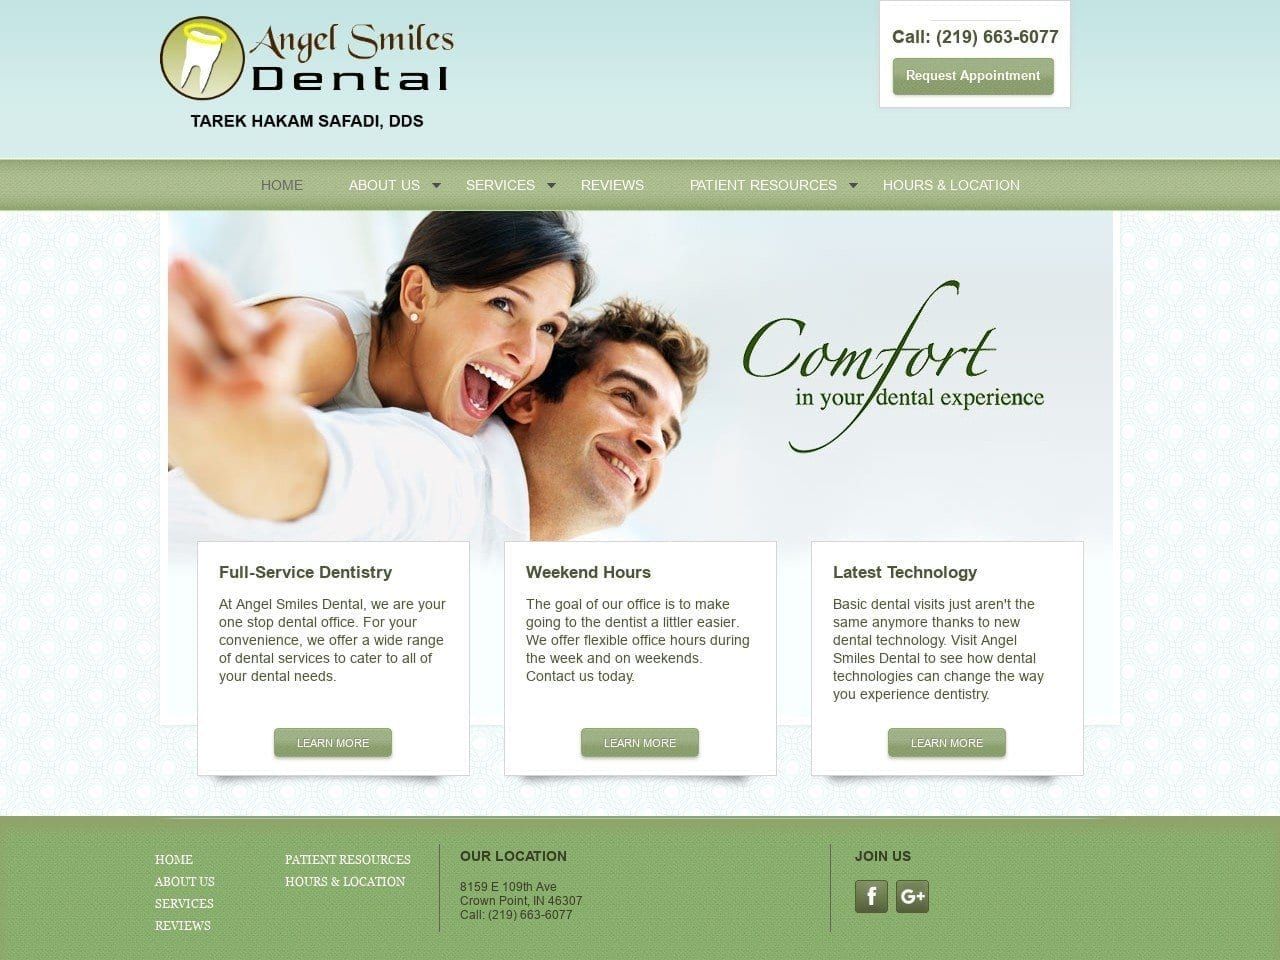 Angel Smiles Dental Website Screenshot from angelsmilesdental.com